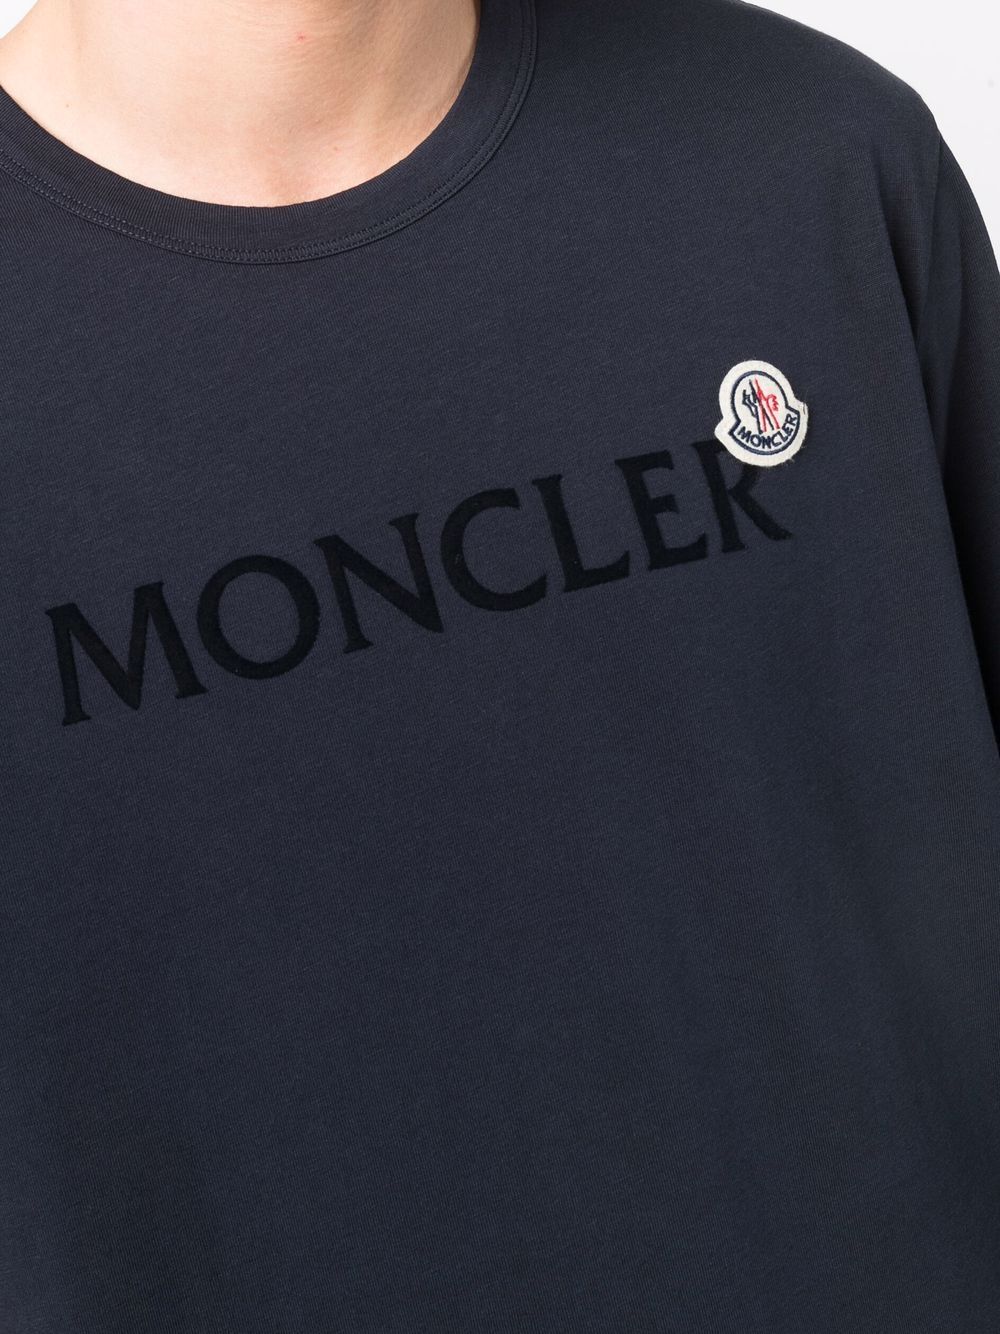 MONCLER Flock Logo T-Shirt Navy - MAISONDEFASHION.COM